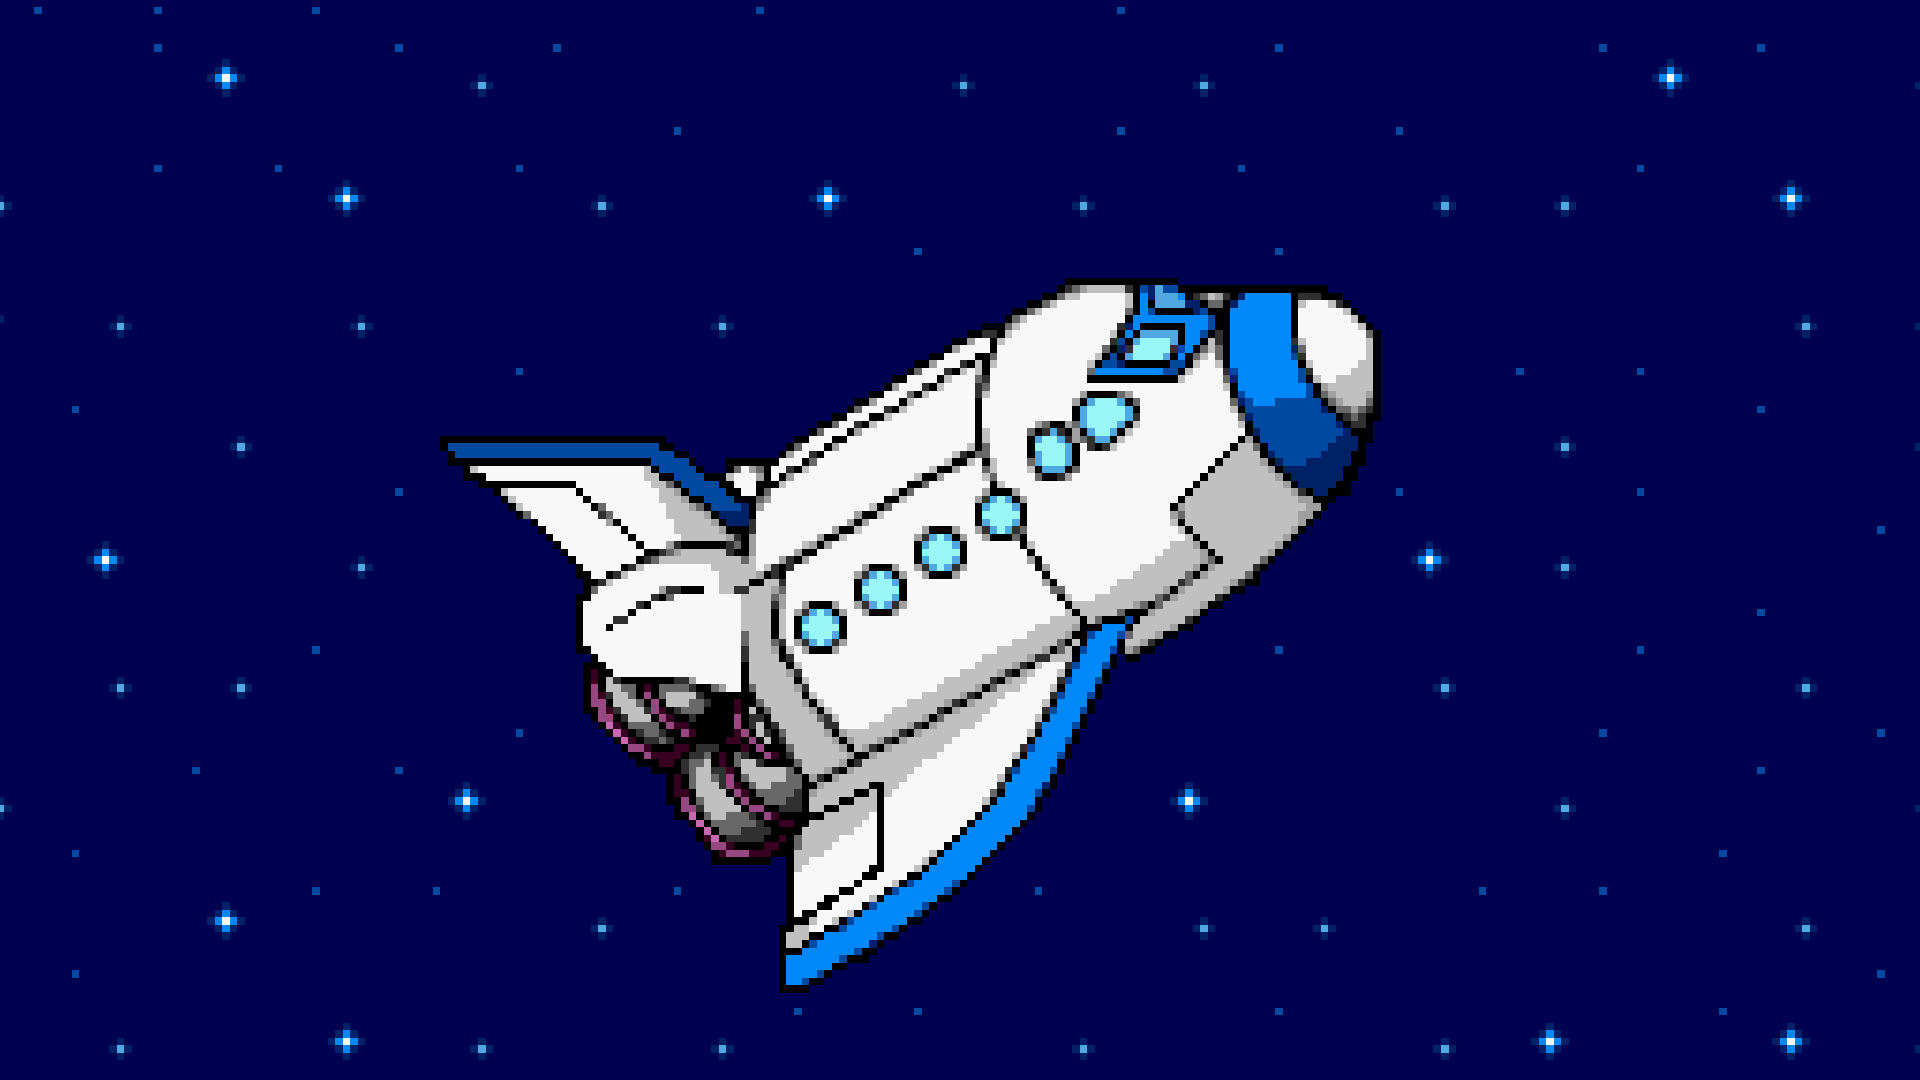 General 1920x1080 digital art minimalism pixel art universe space stars spaceship rocket blue background bomberman vehicle